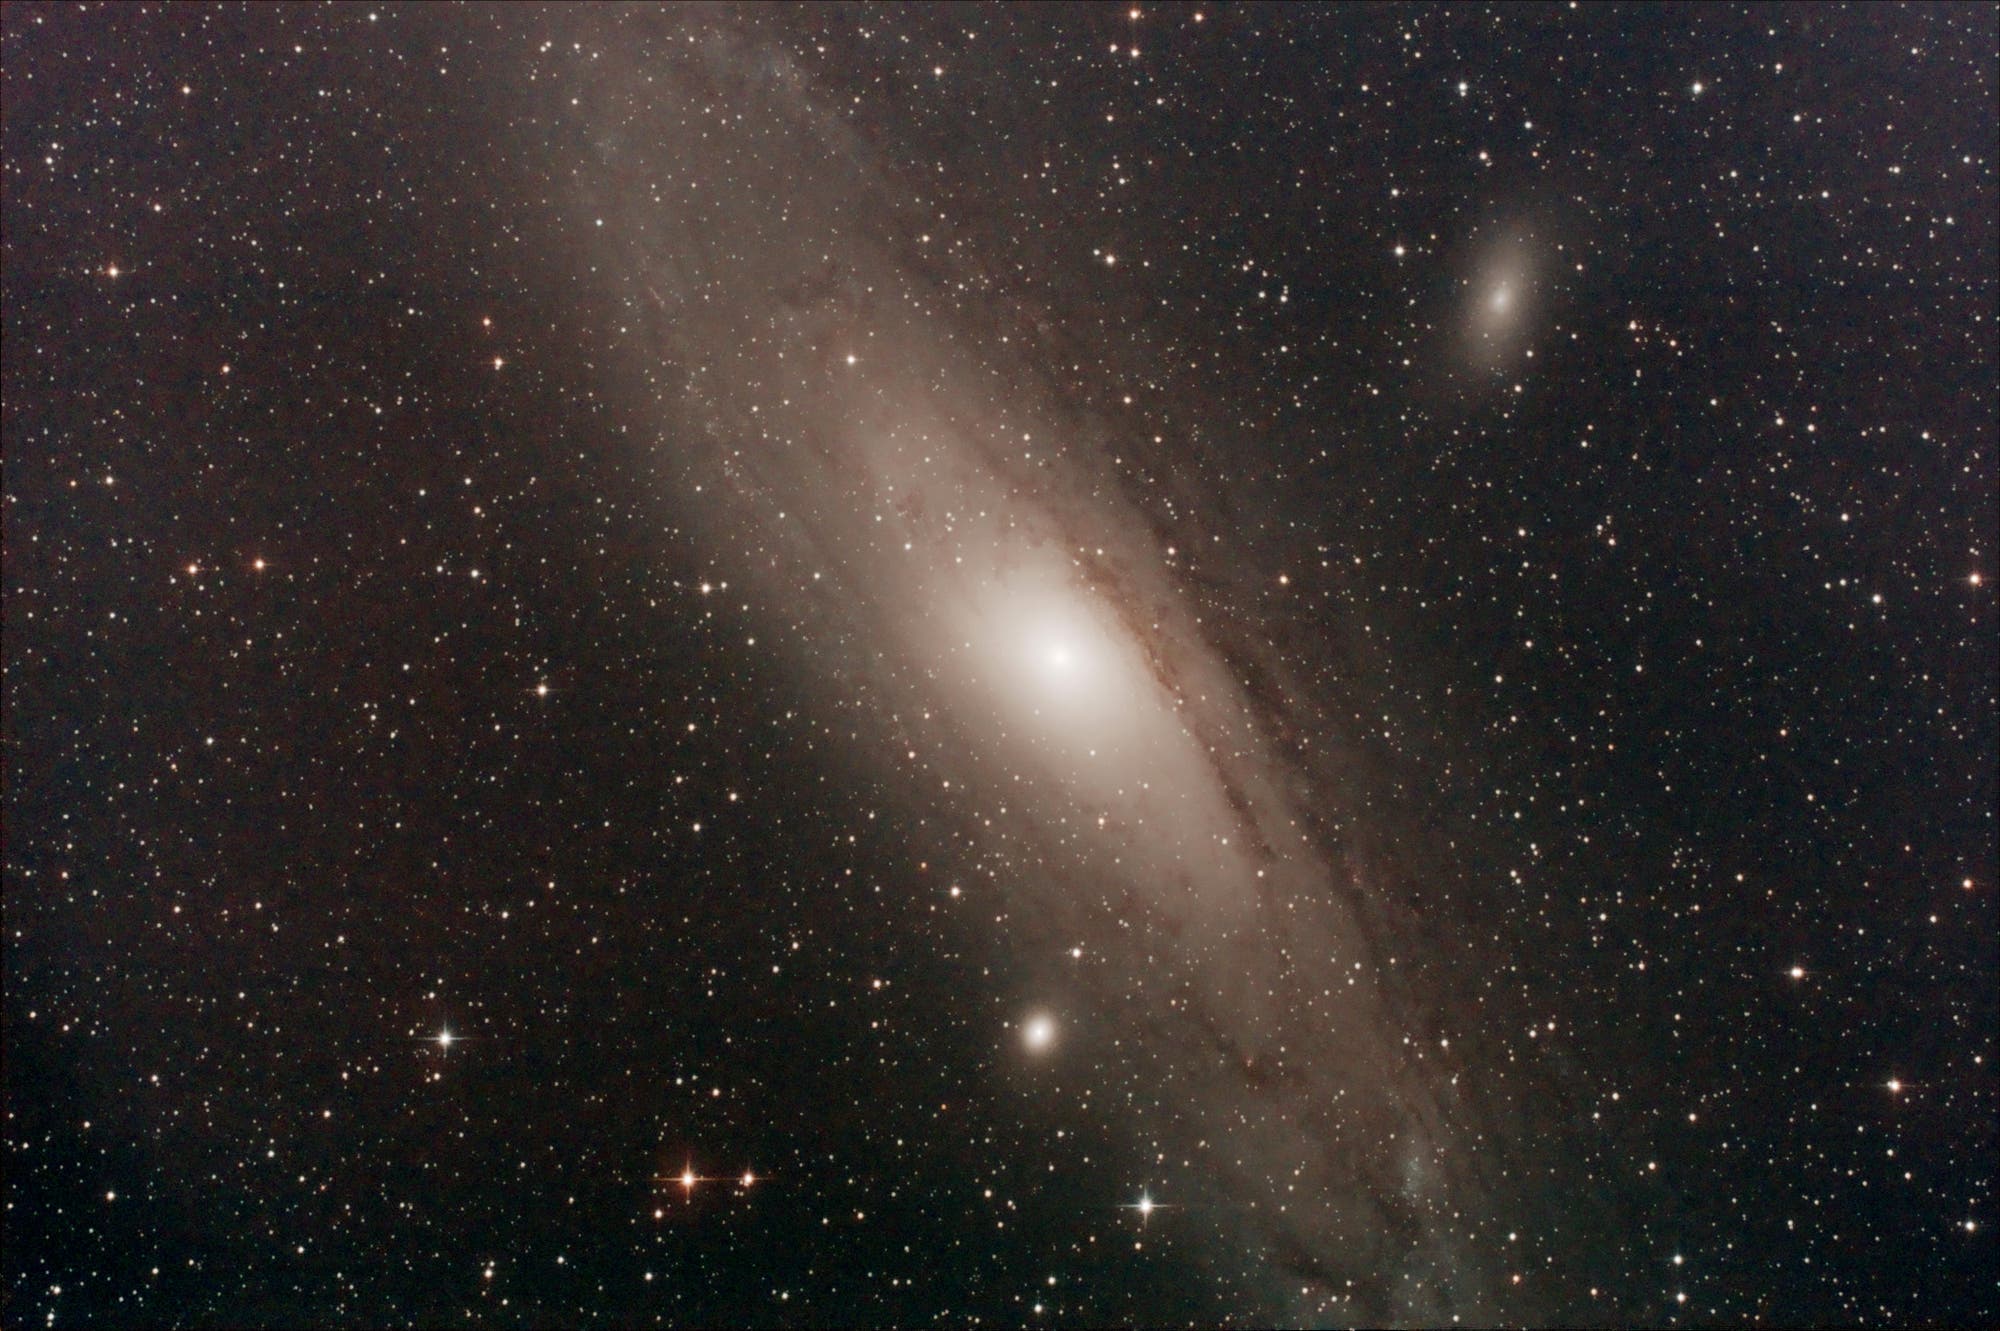 Andromedagalaxie Messier 31 im Sternbild Andromeda